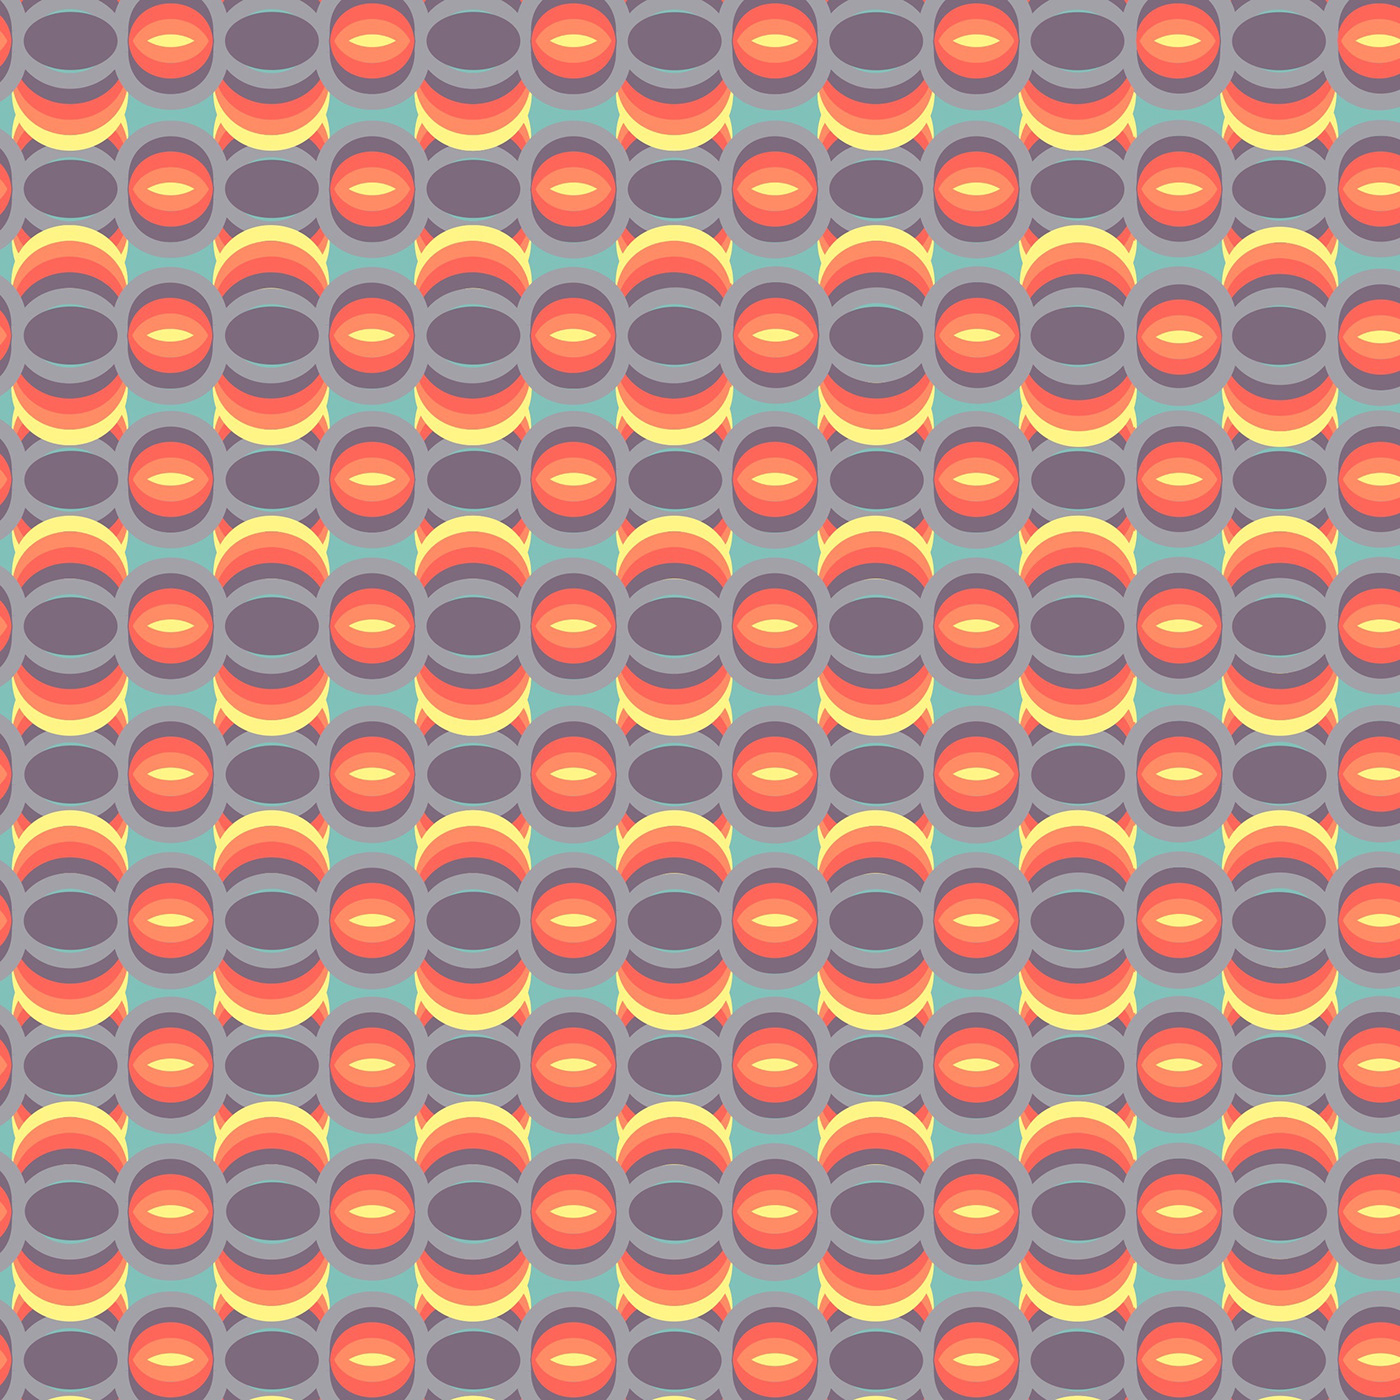 amateur paper crafts pattern design  craft graphic design  paper tile pattern tiles